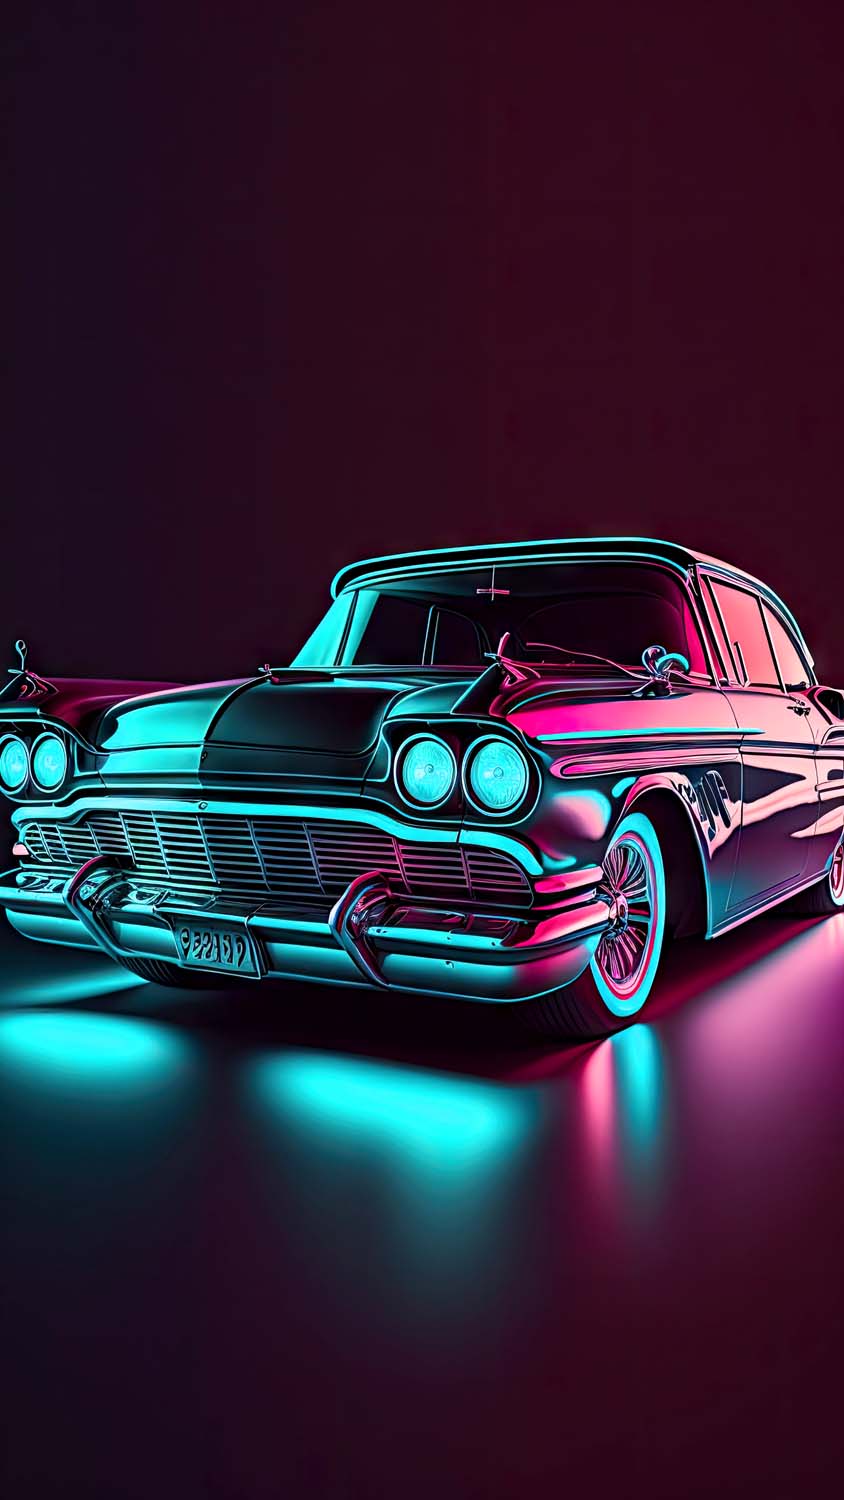 Wallpaper : sports car, Retro car, neon 1800x1126 - rehctawatcher - 1563657  - HD Wallpapers - WallHere